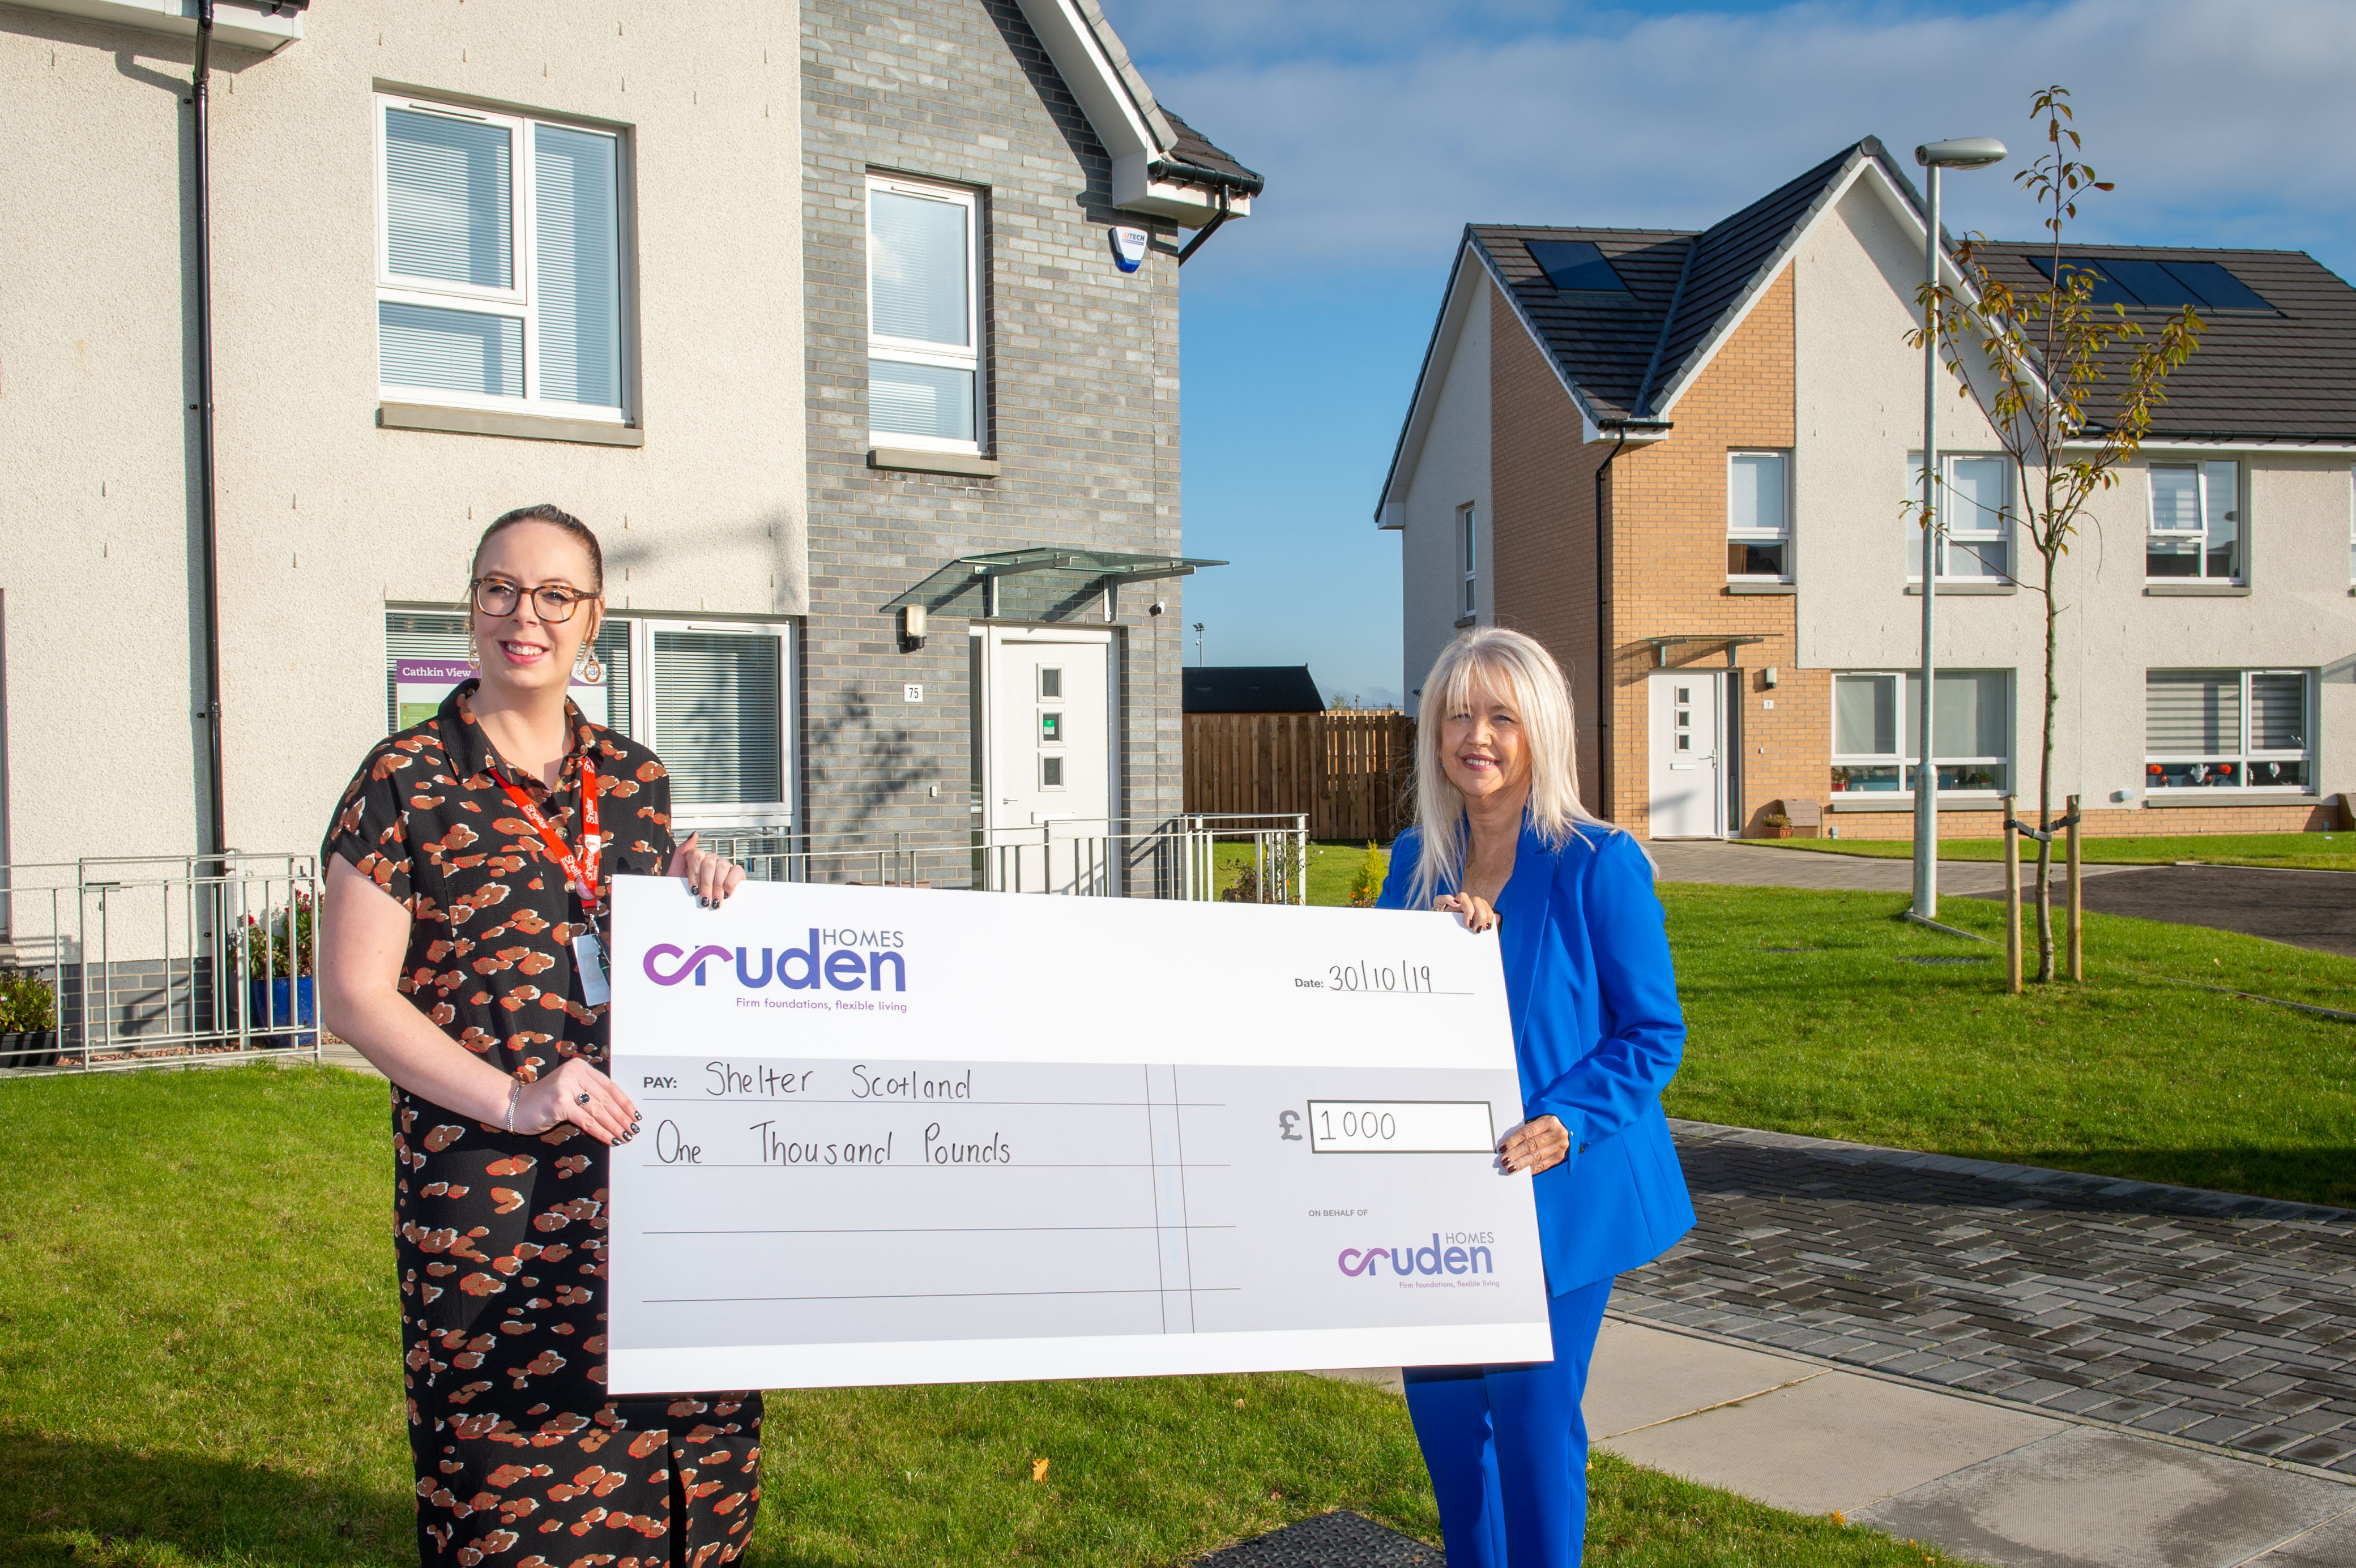 Cruden Homes West donates £1k to Shelter Scotland